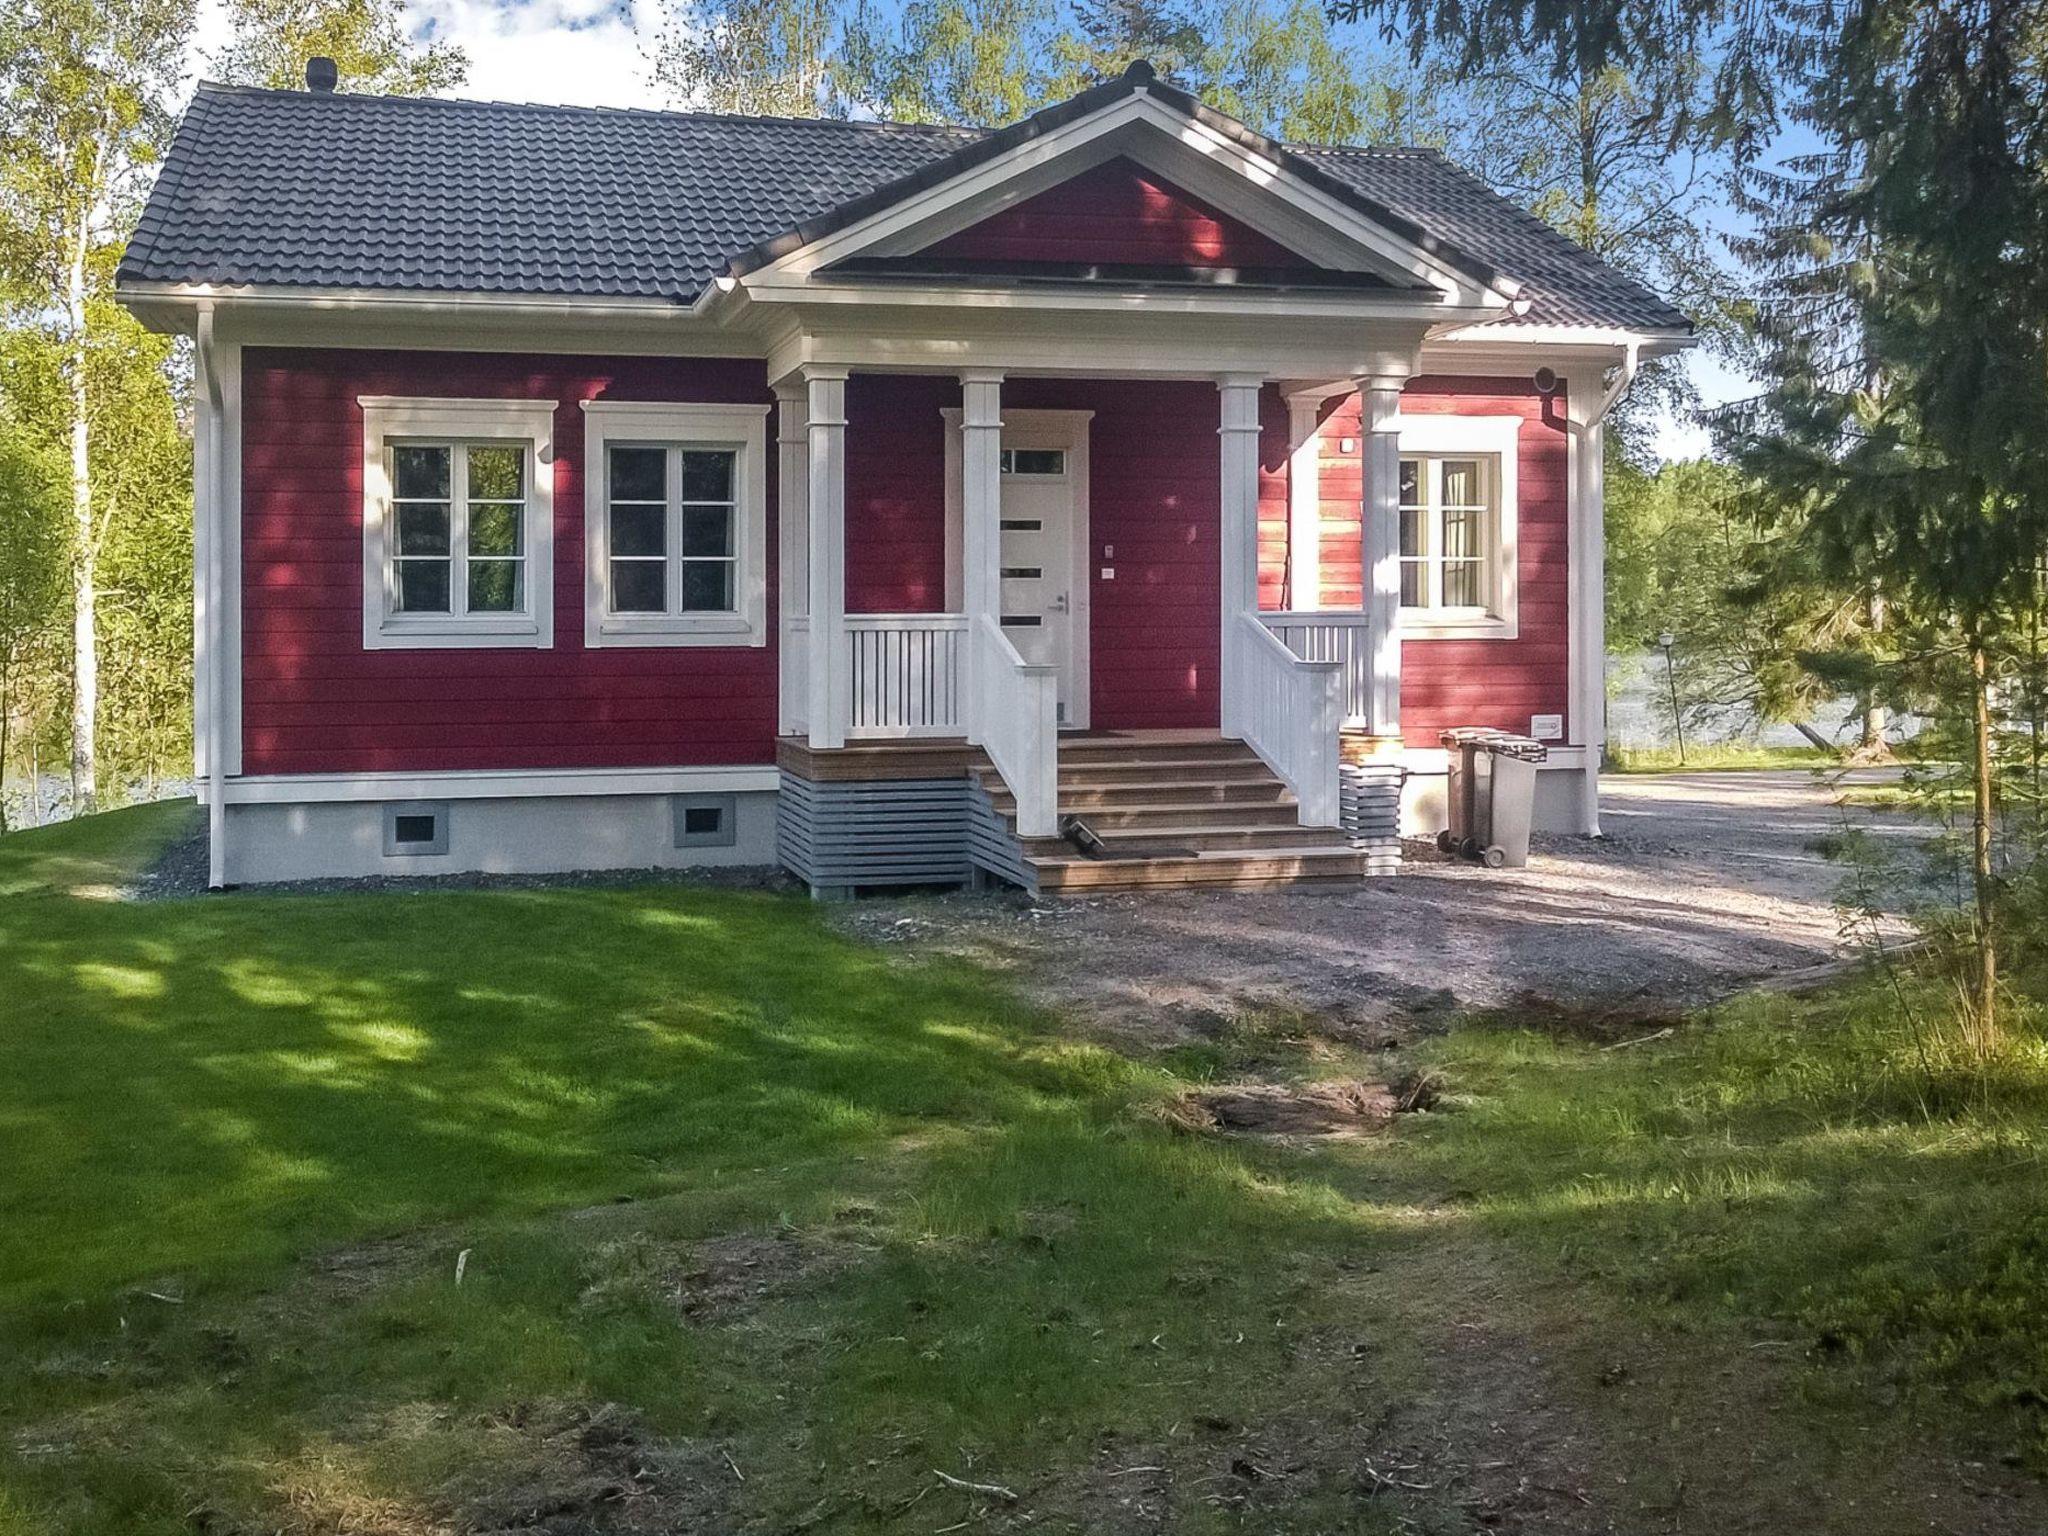 Photo 2 - 3 bedroom House in Mikkeli with sauna